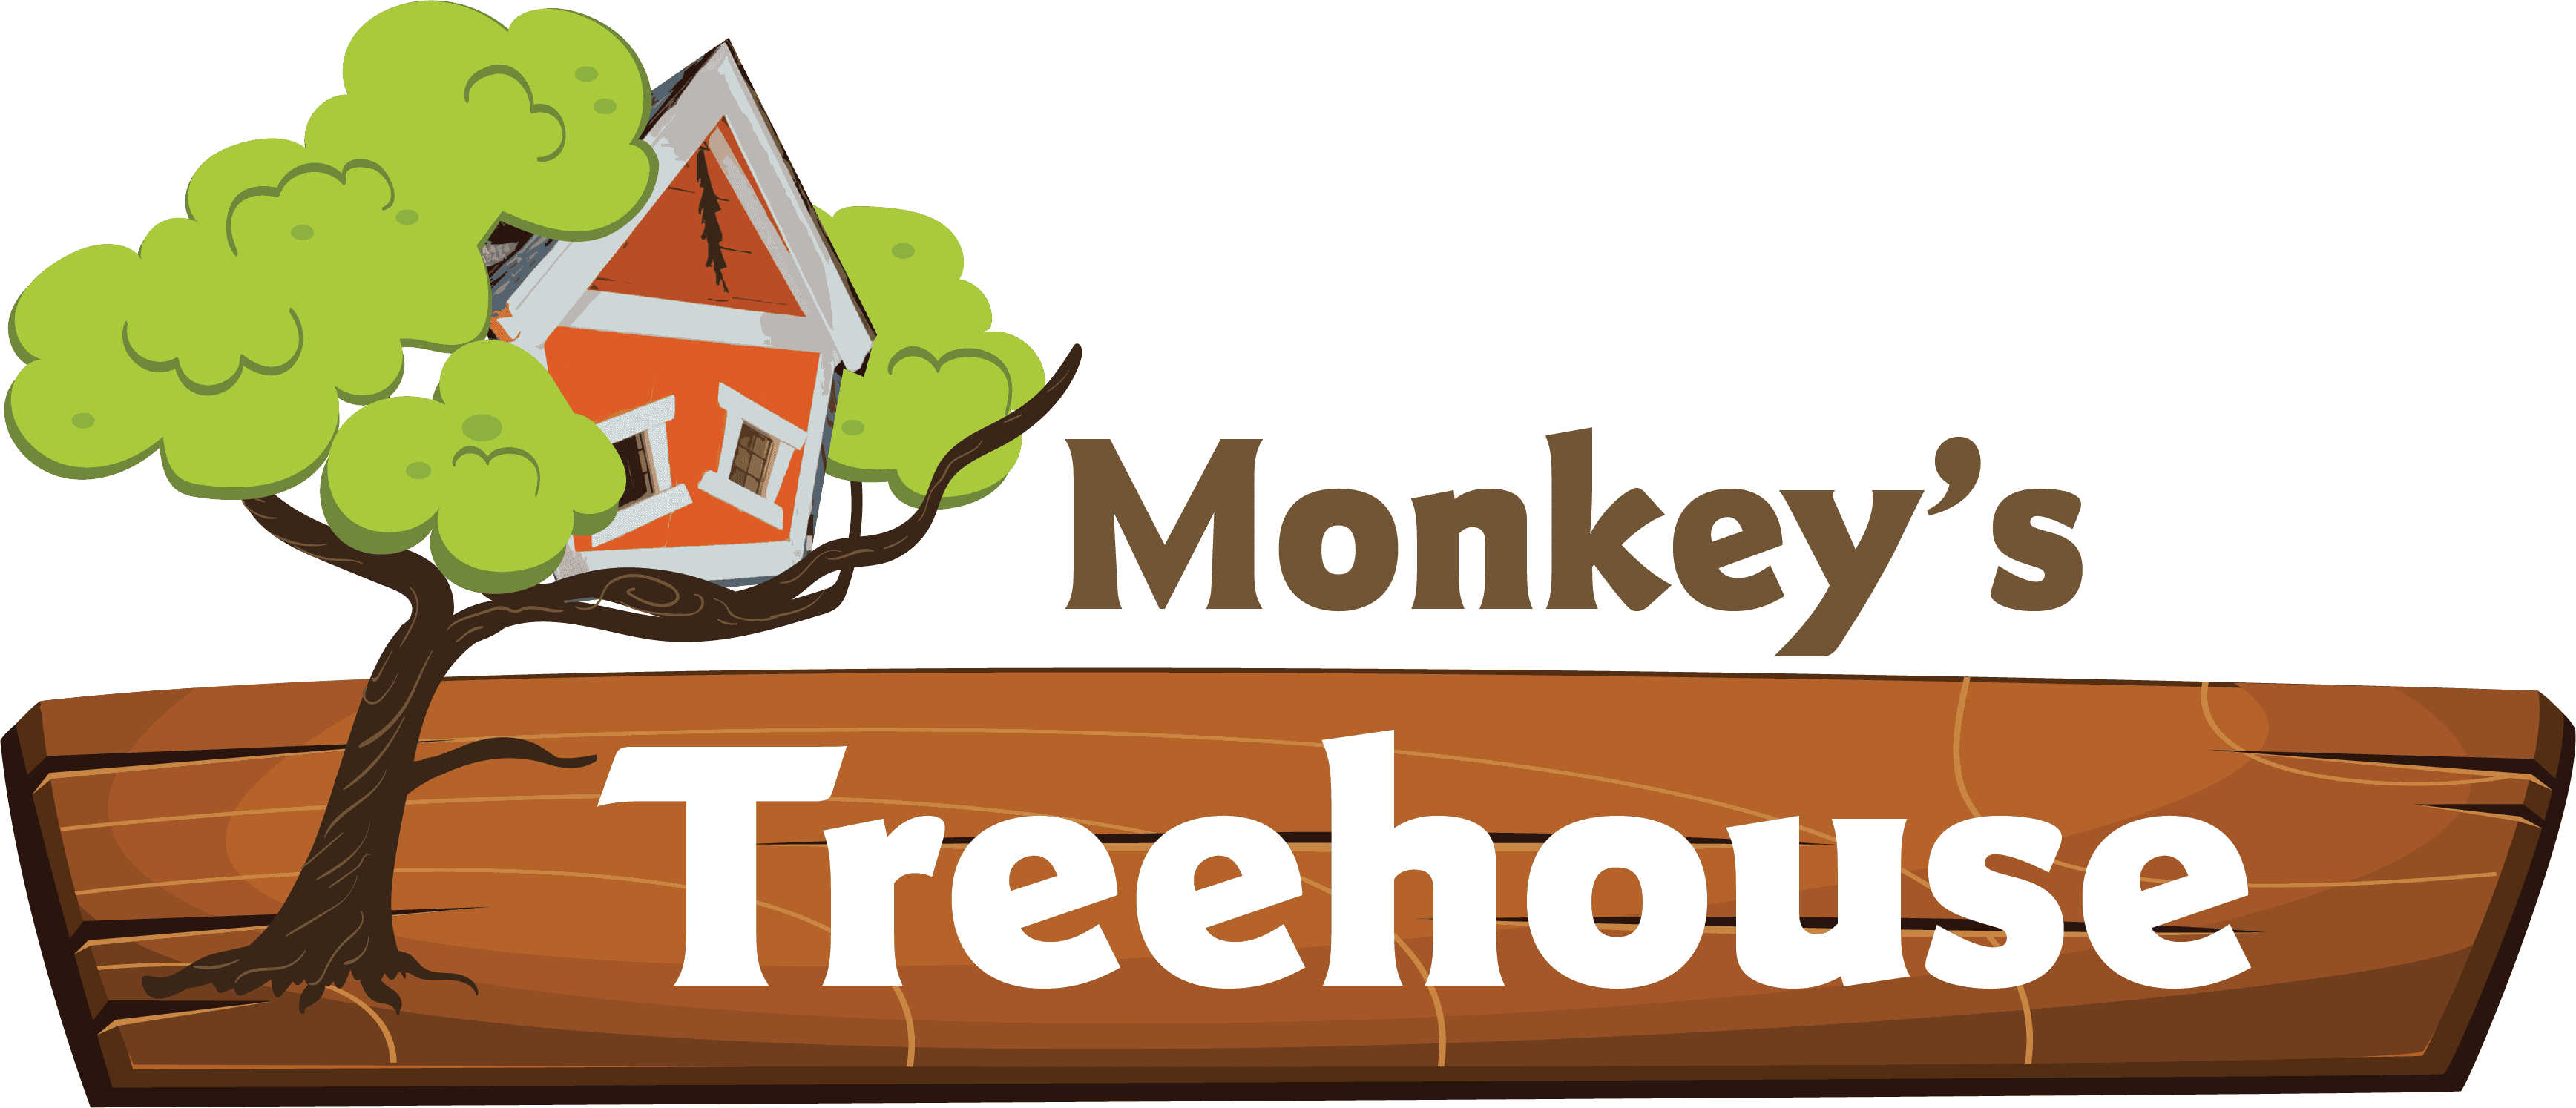 logo-treehouse